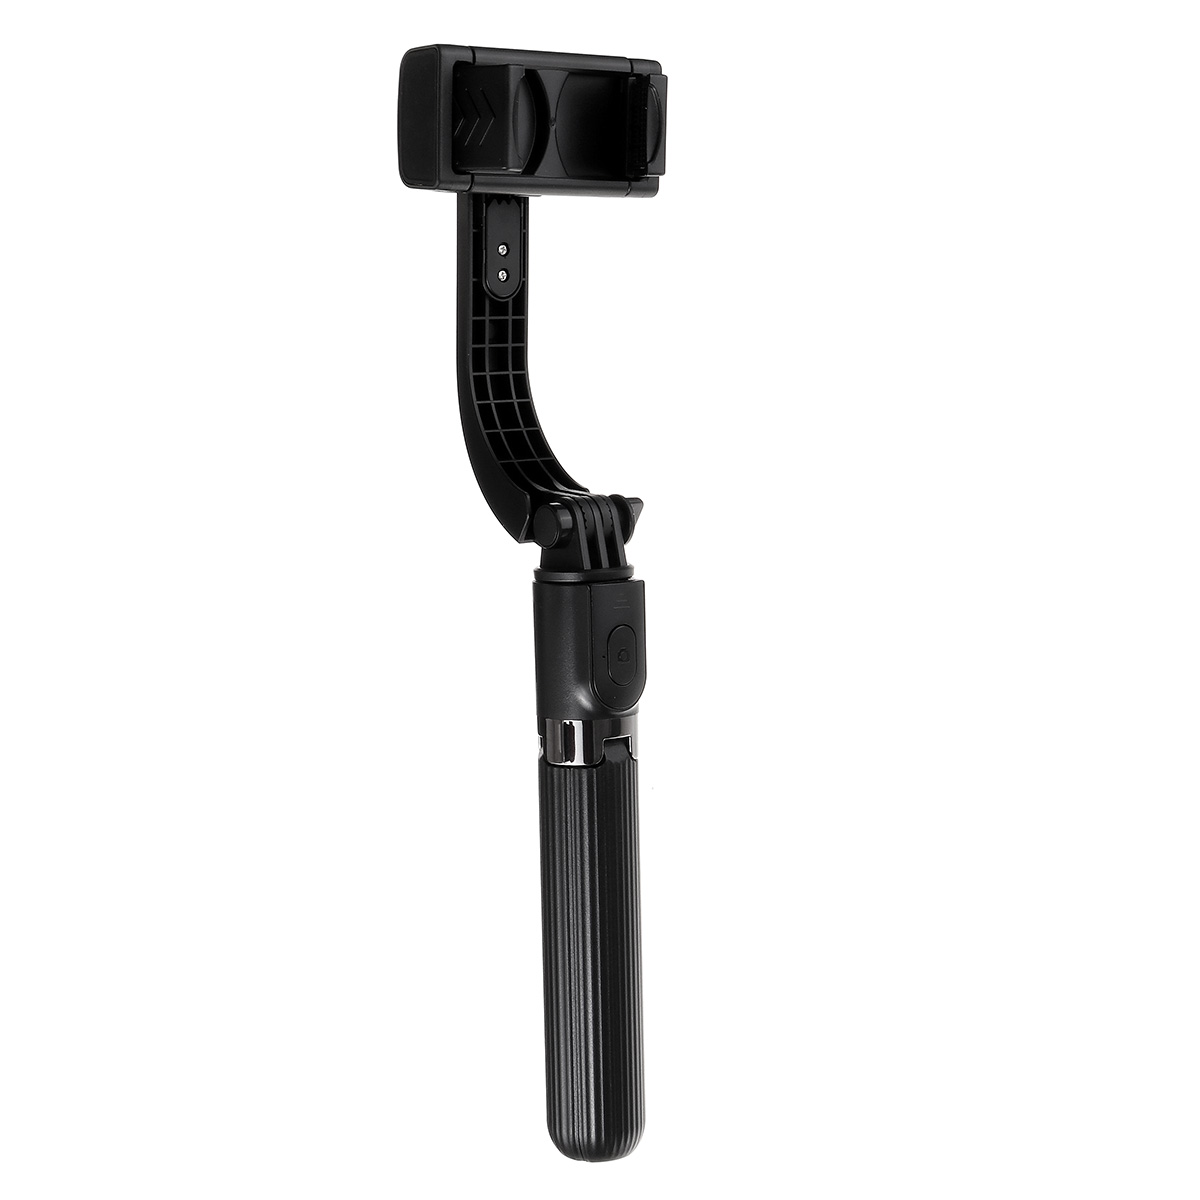 L08-Handheld-Extendable-bluetooth-Aluminium-Alloy-Tripod-Selfie-Stick-for-Mobile-Phone-Shooting-Stab-1916702-4